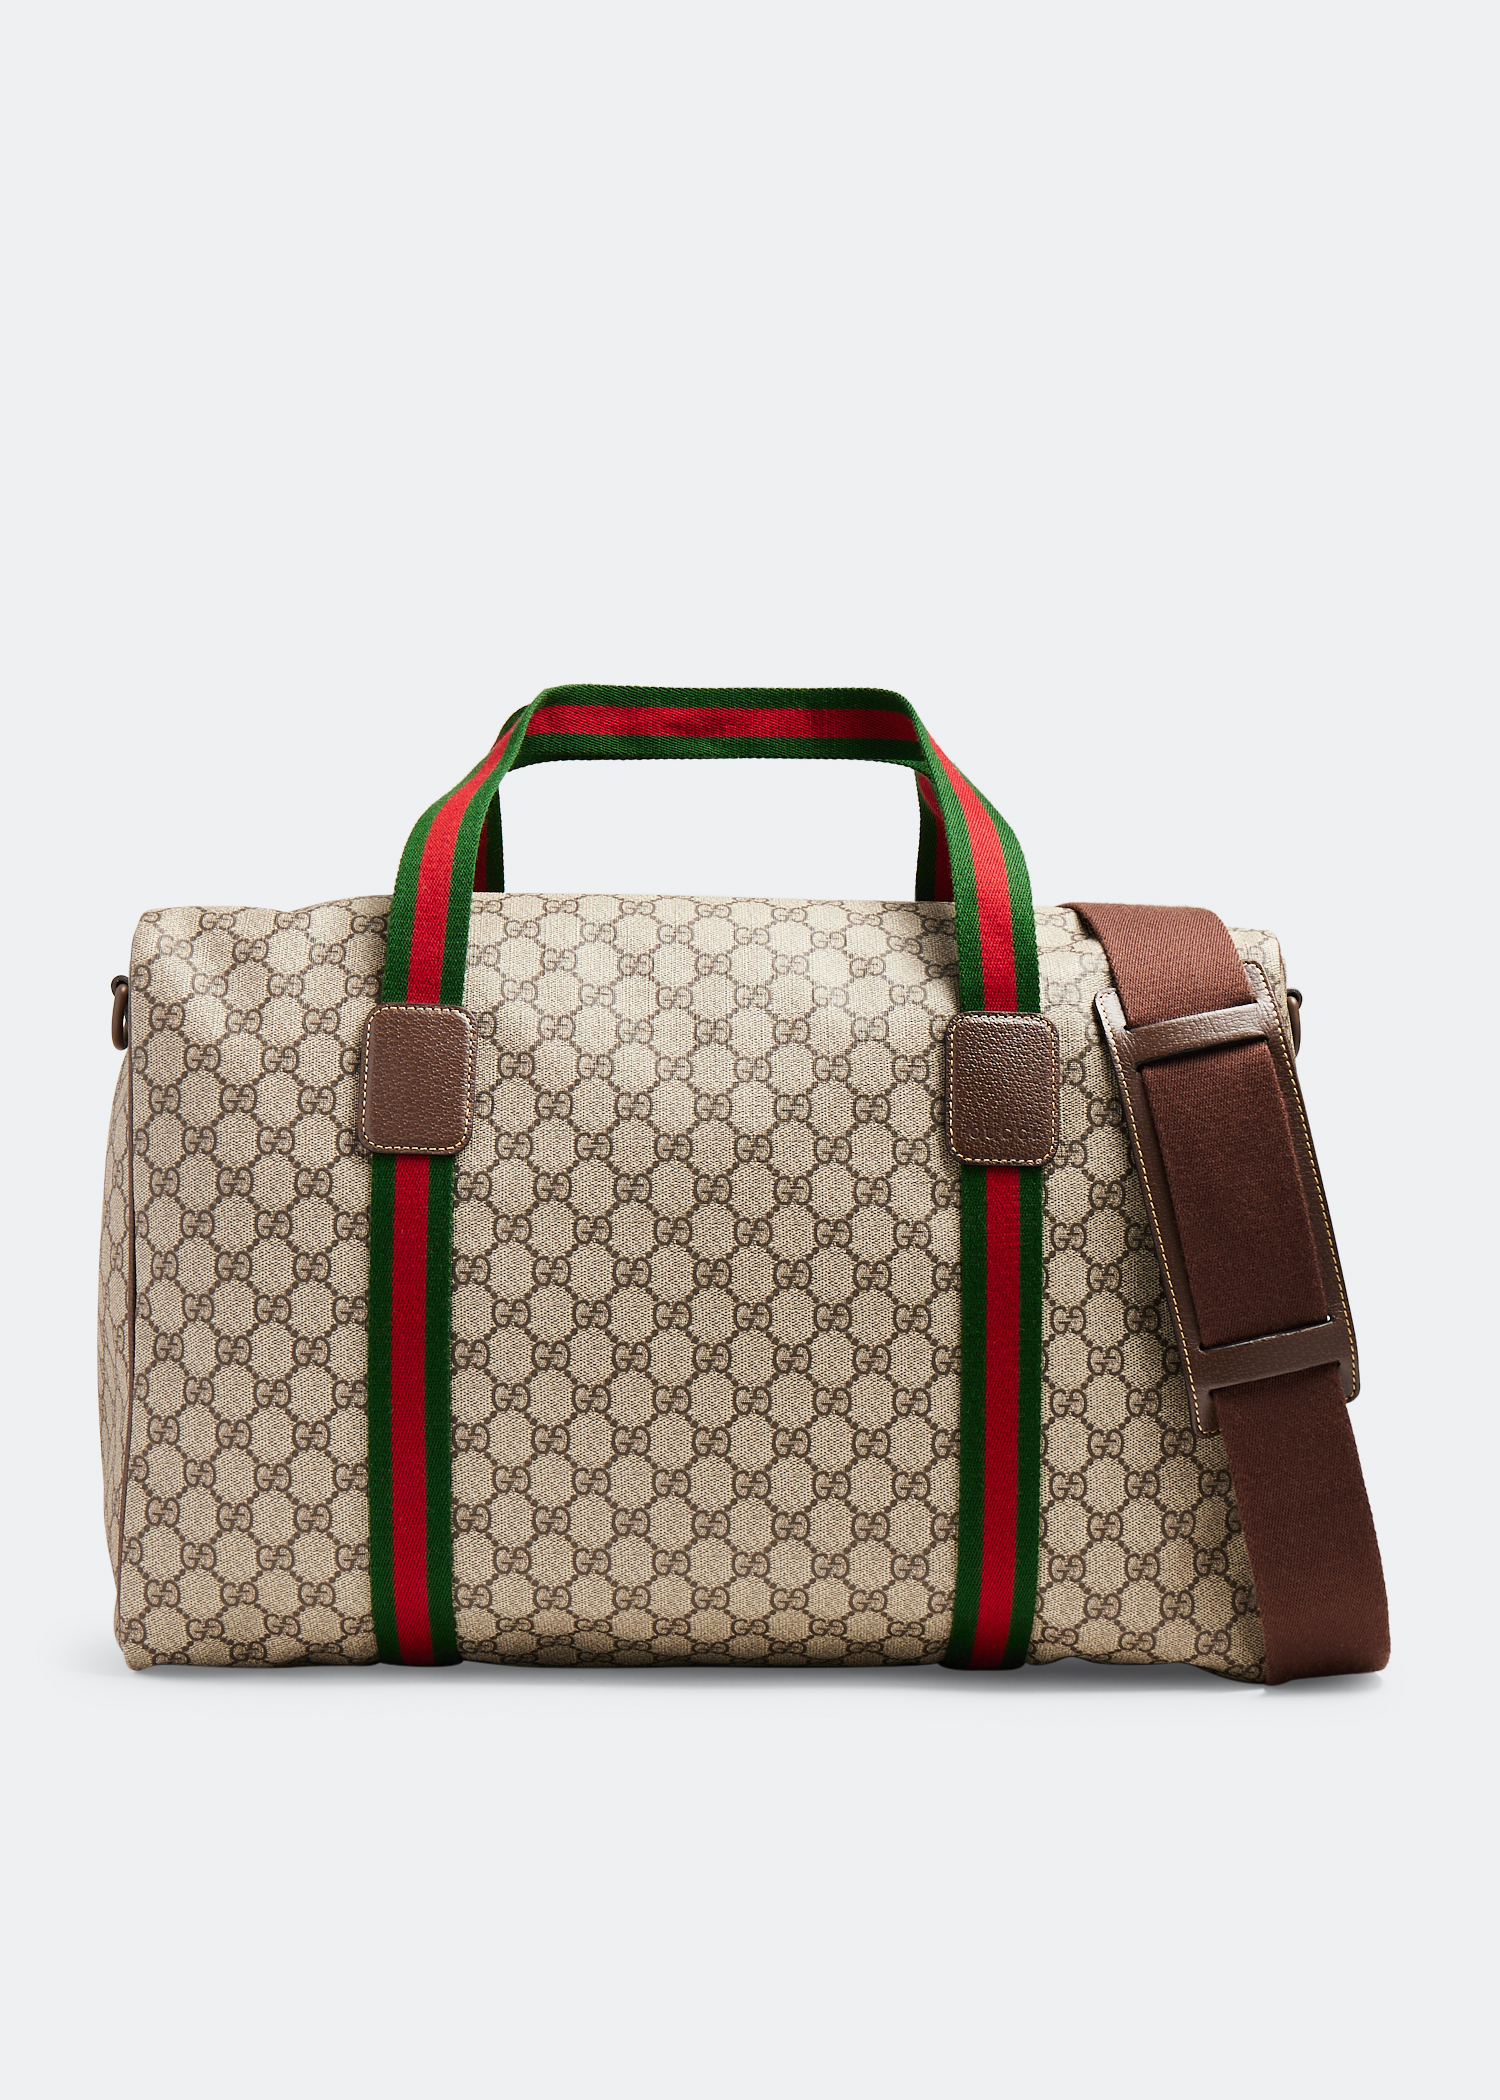 Gucci Duffle Bags & Handbags for Women | Authenticity Guaranteed | eBay